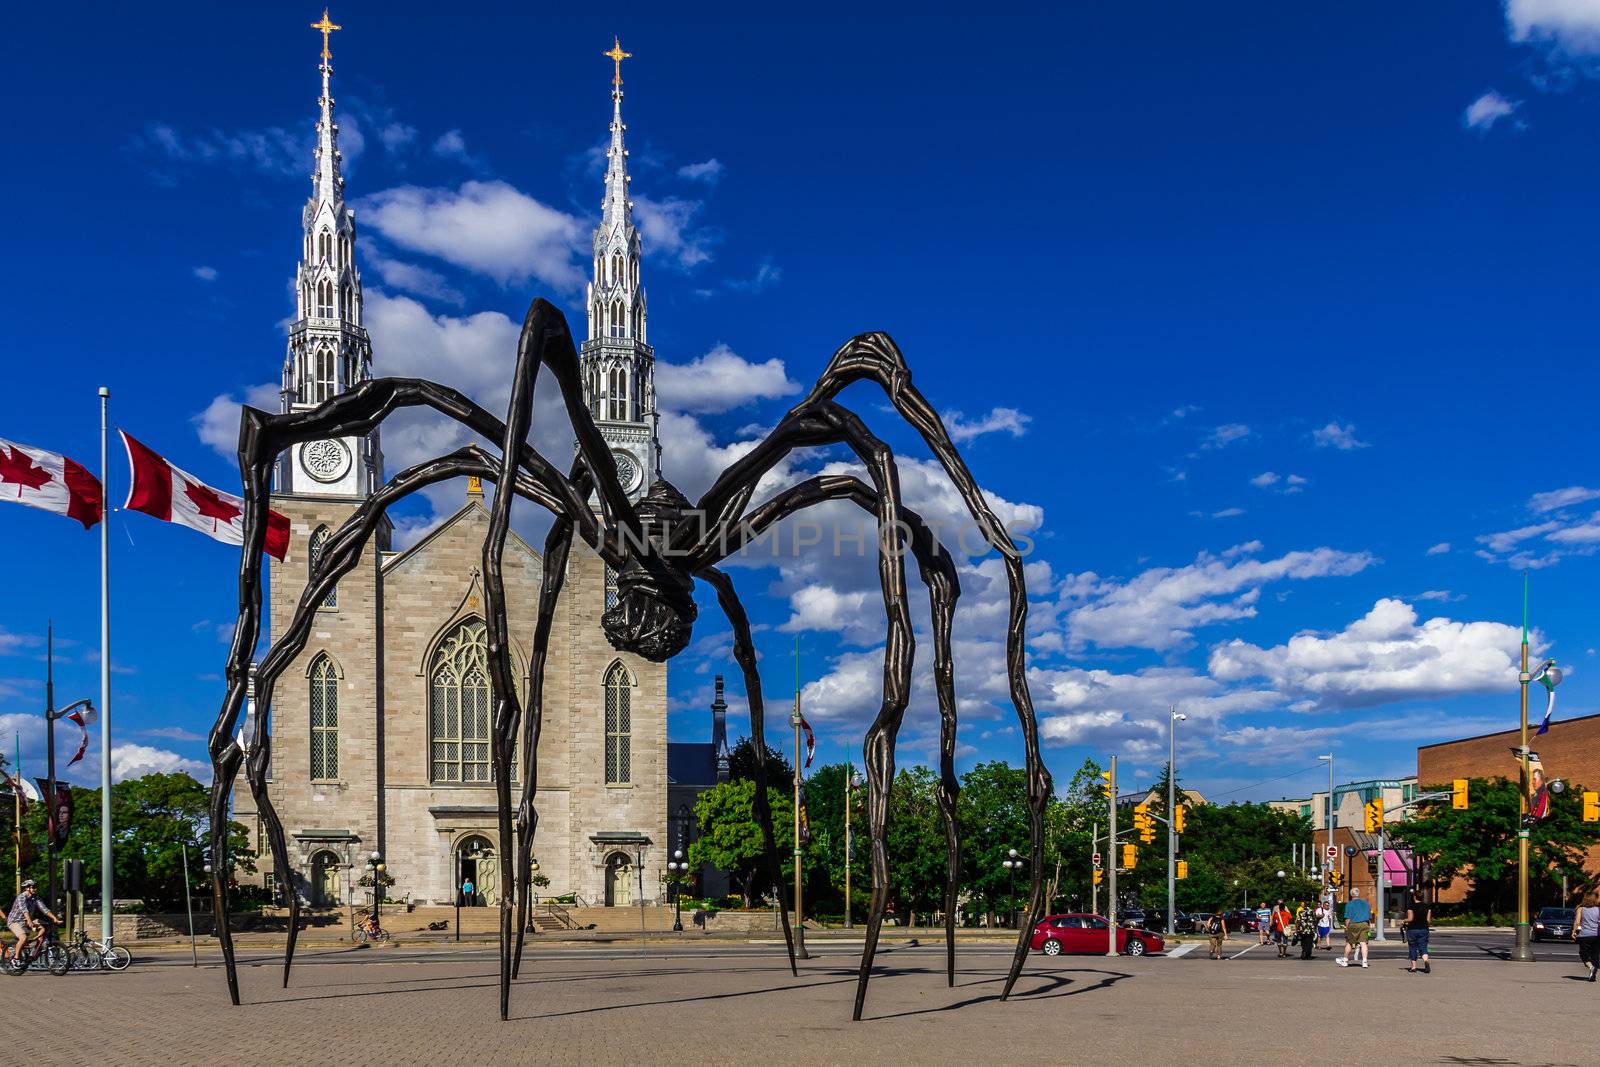 Maman spider sculpture by petkolophoto